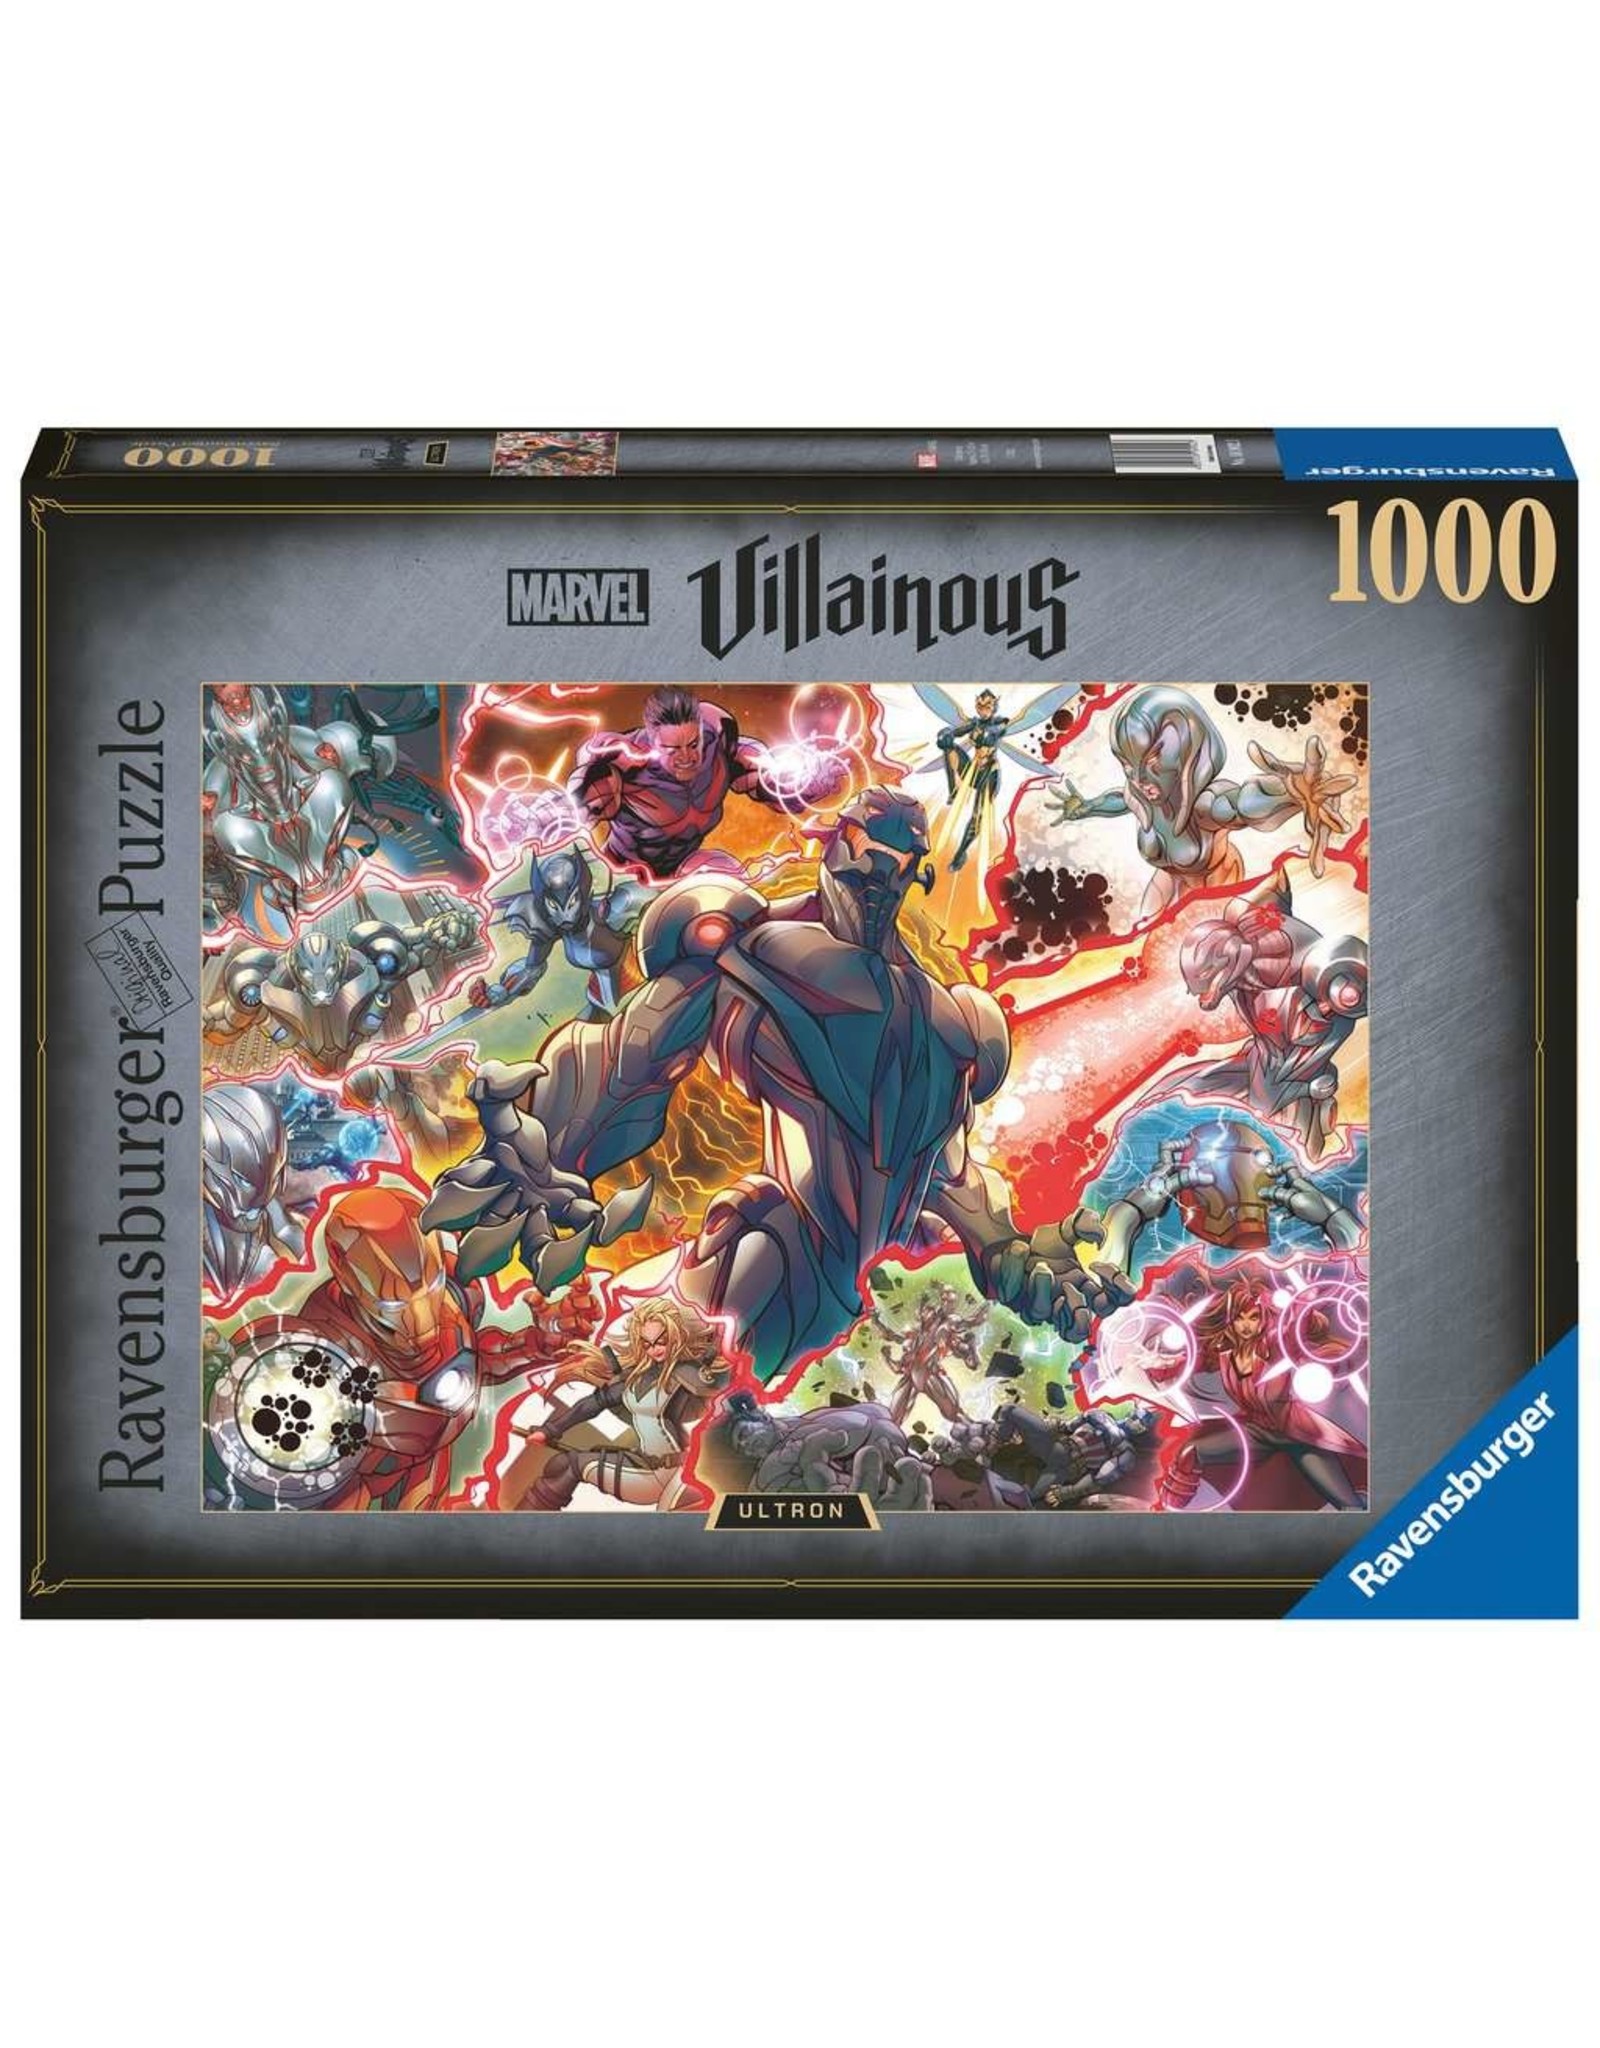 Ravensburger Marvel Villainous: Ultron 1000pc